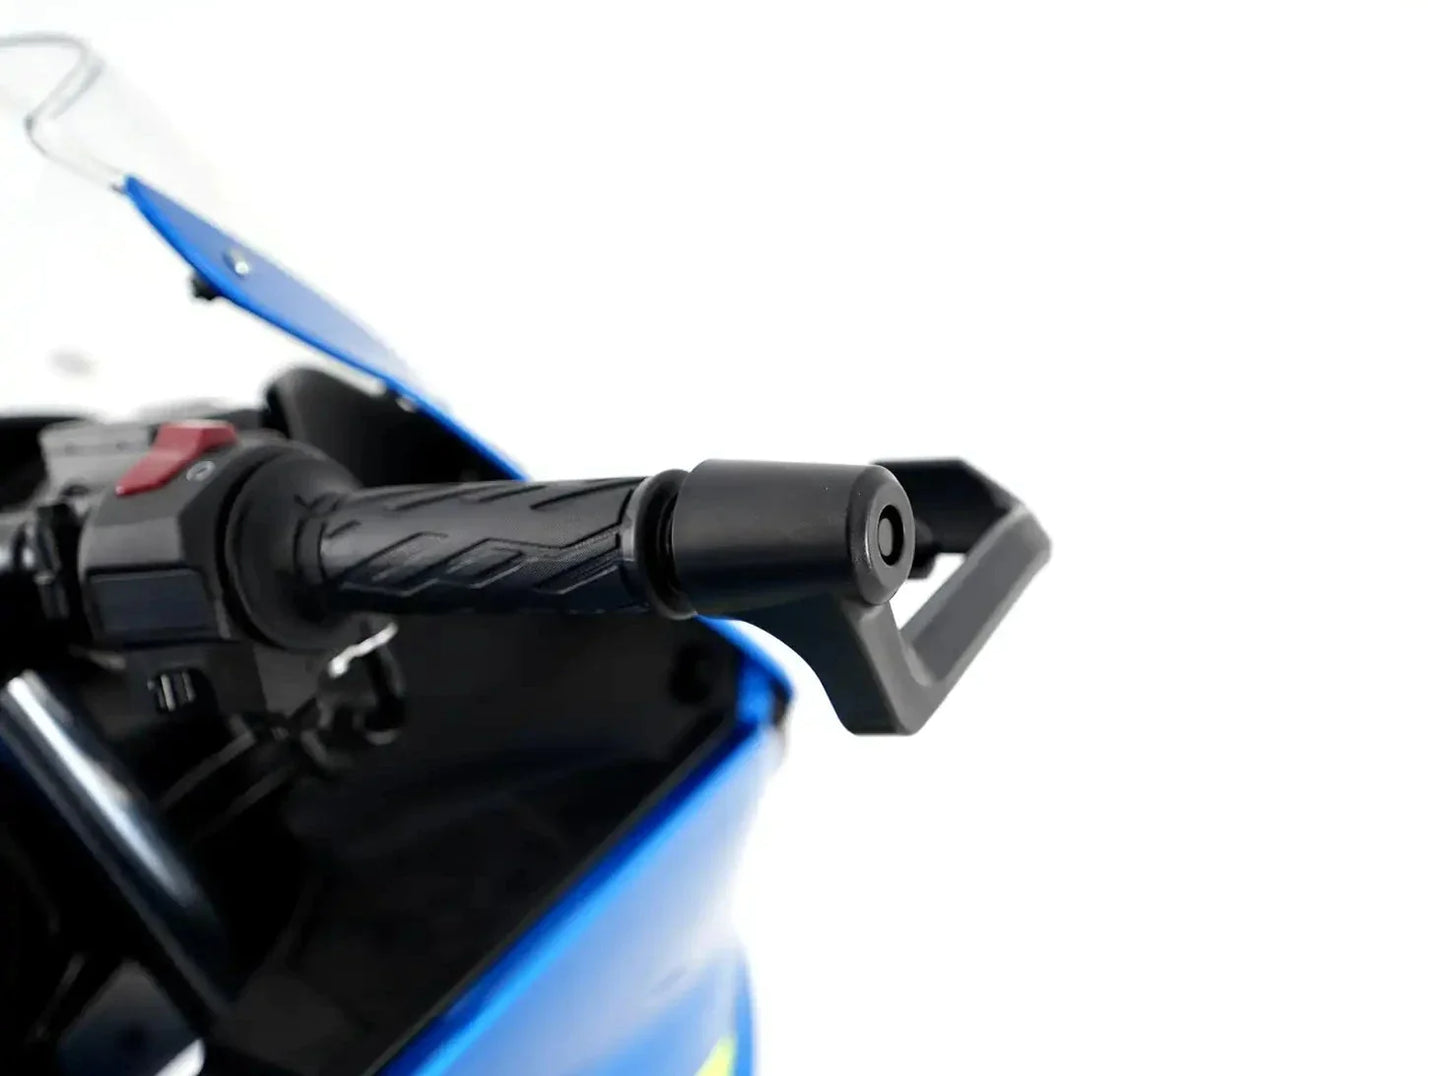 BLG0015 - R&G RACING Husqvarna / KTM / Suzuki / Yamaha Brake Lever Guard